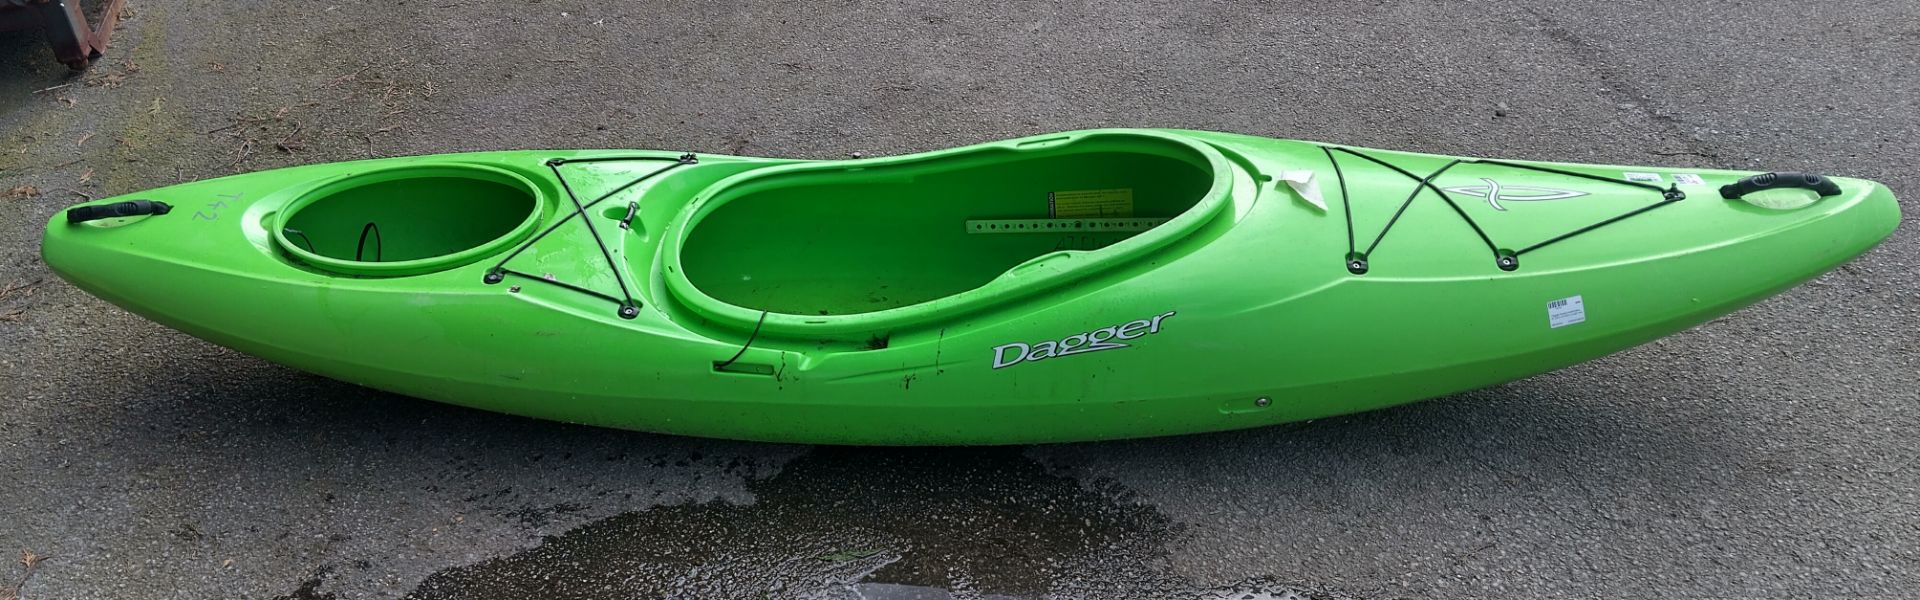 Dagger Kayak polyethylene - W 3200 x D 660 x H 420 mm - GREEN - Image 2 of 2